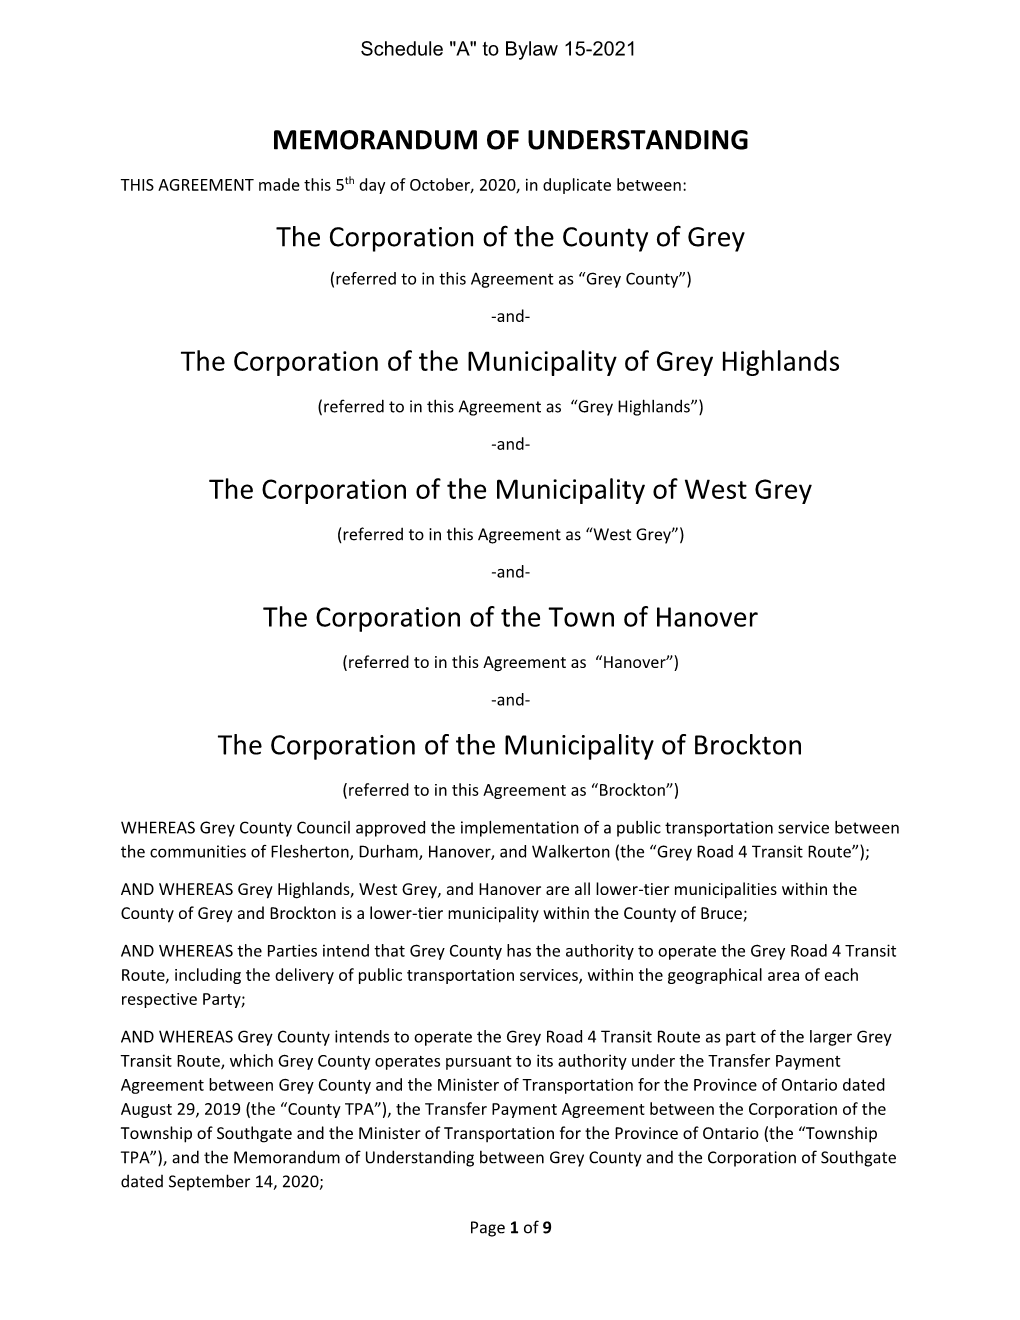 Community Transportation Agreement Grey Road 4